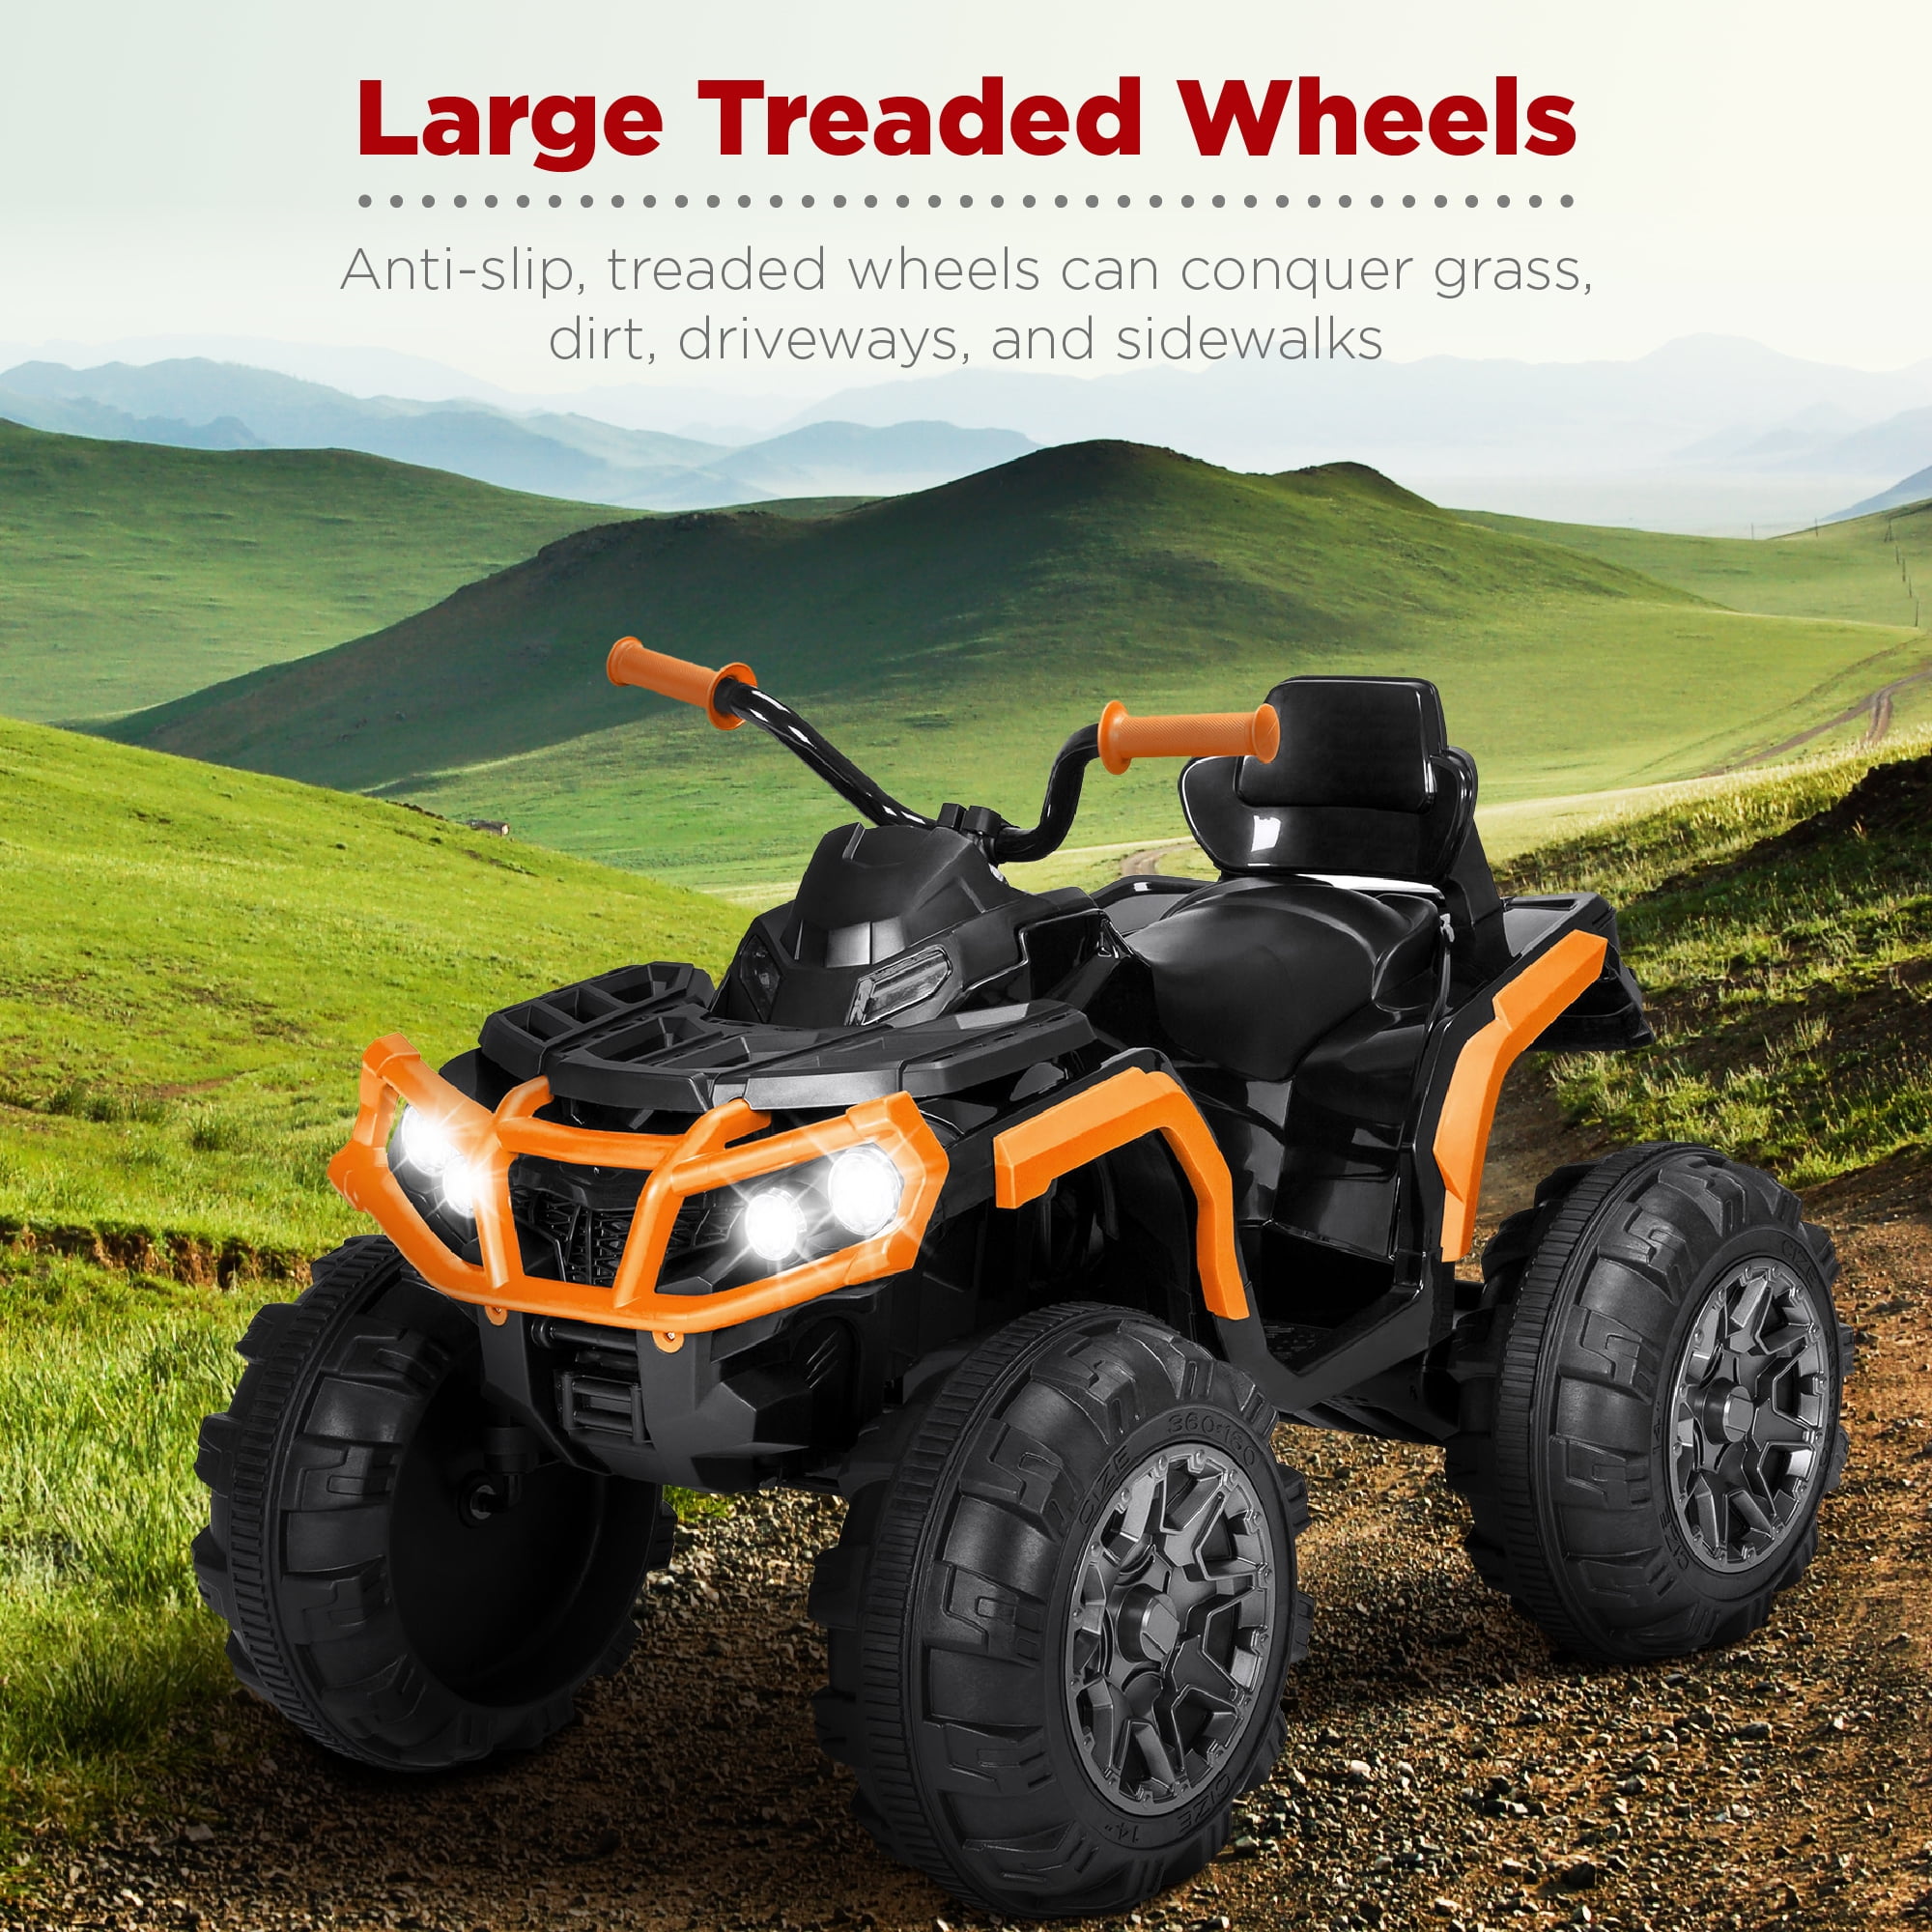 Best Choice Products 12V Kids Ride-On ATV Quad w/ Bluetooth, 3.7mph Max, Treaded Tires, LED Lights, Radio - Orange - 1